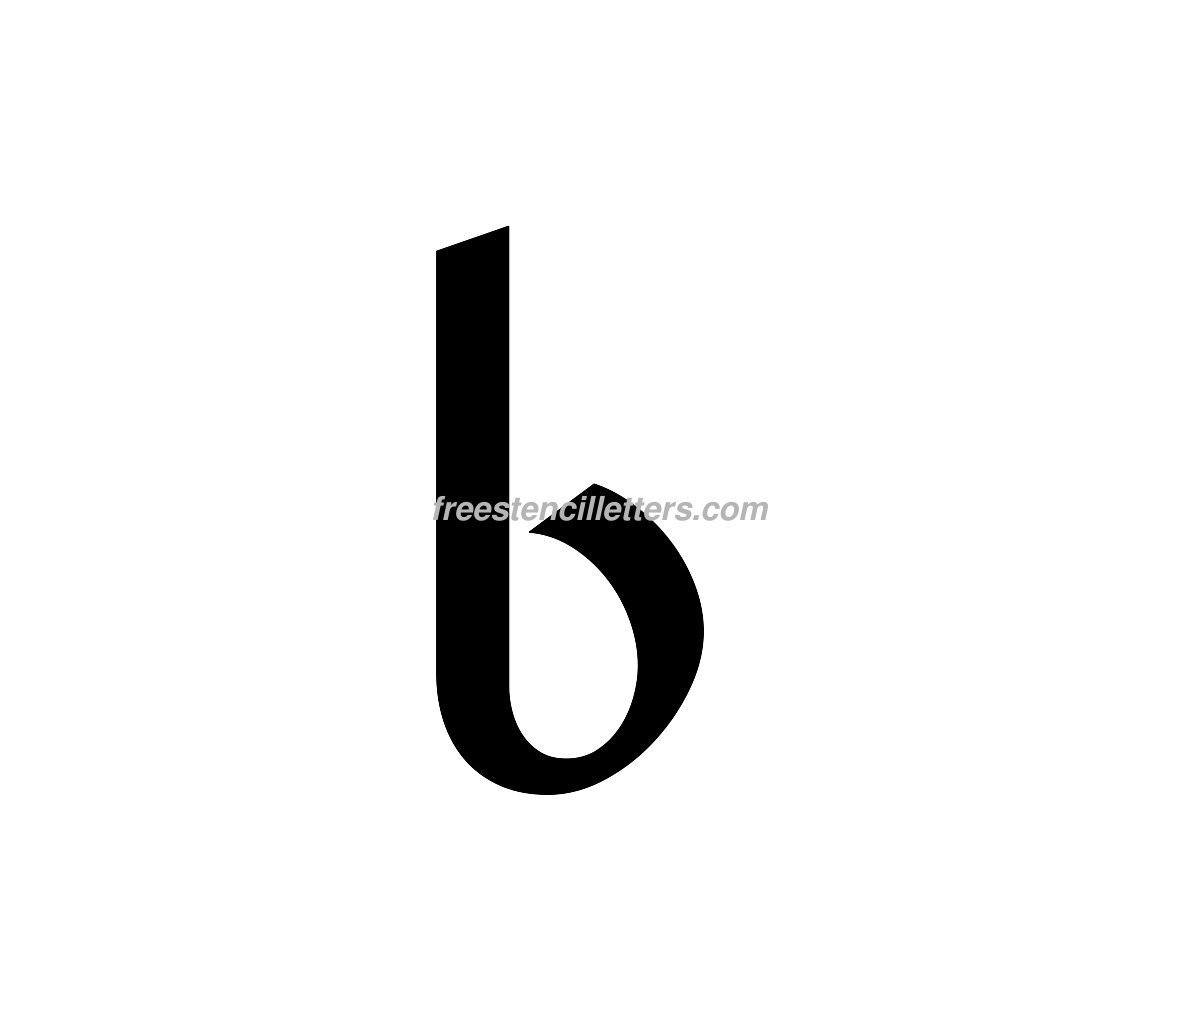 lowercase b